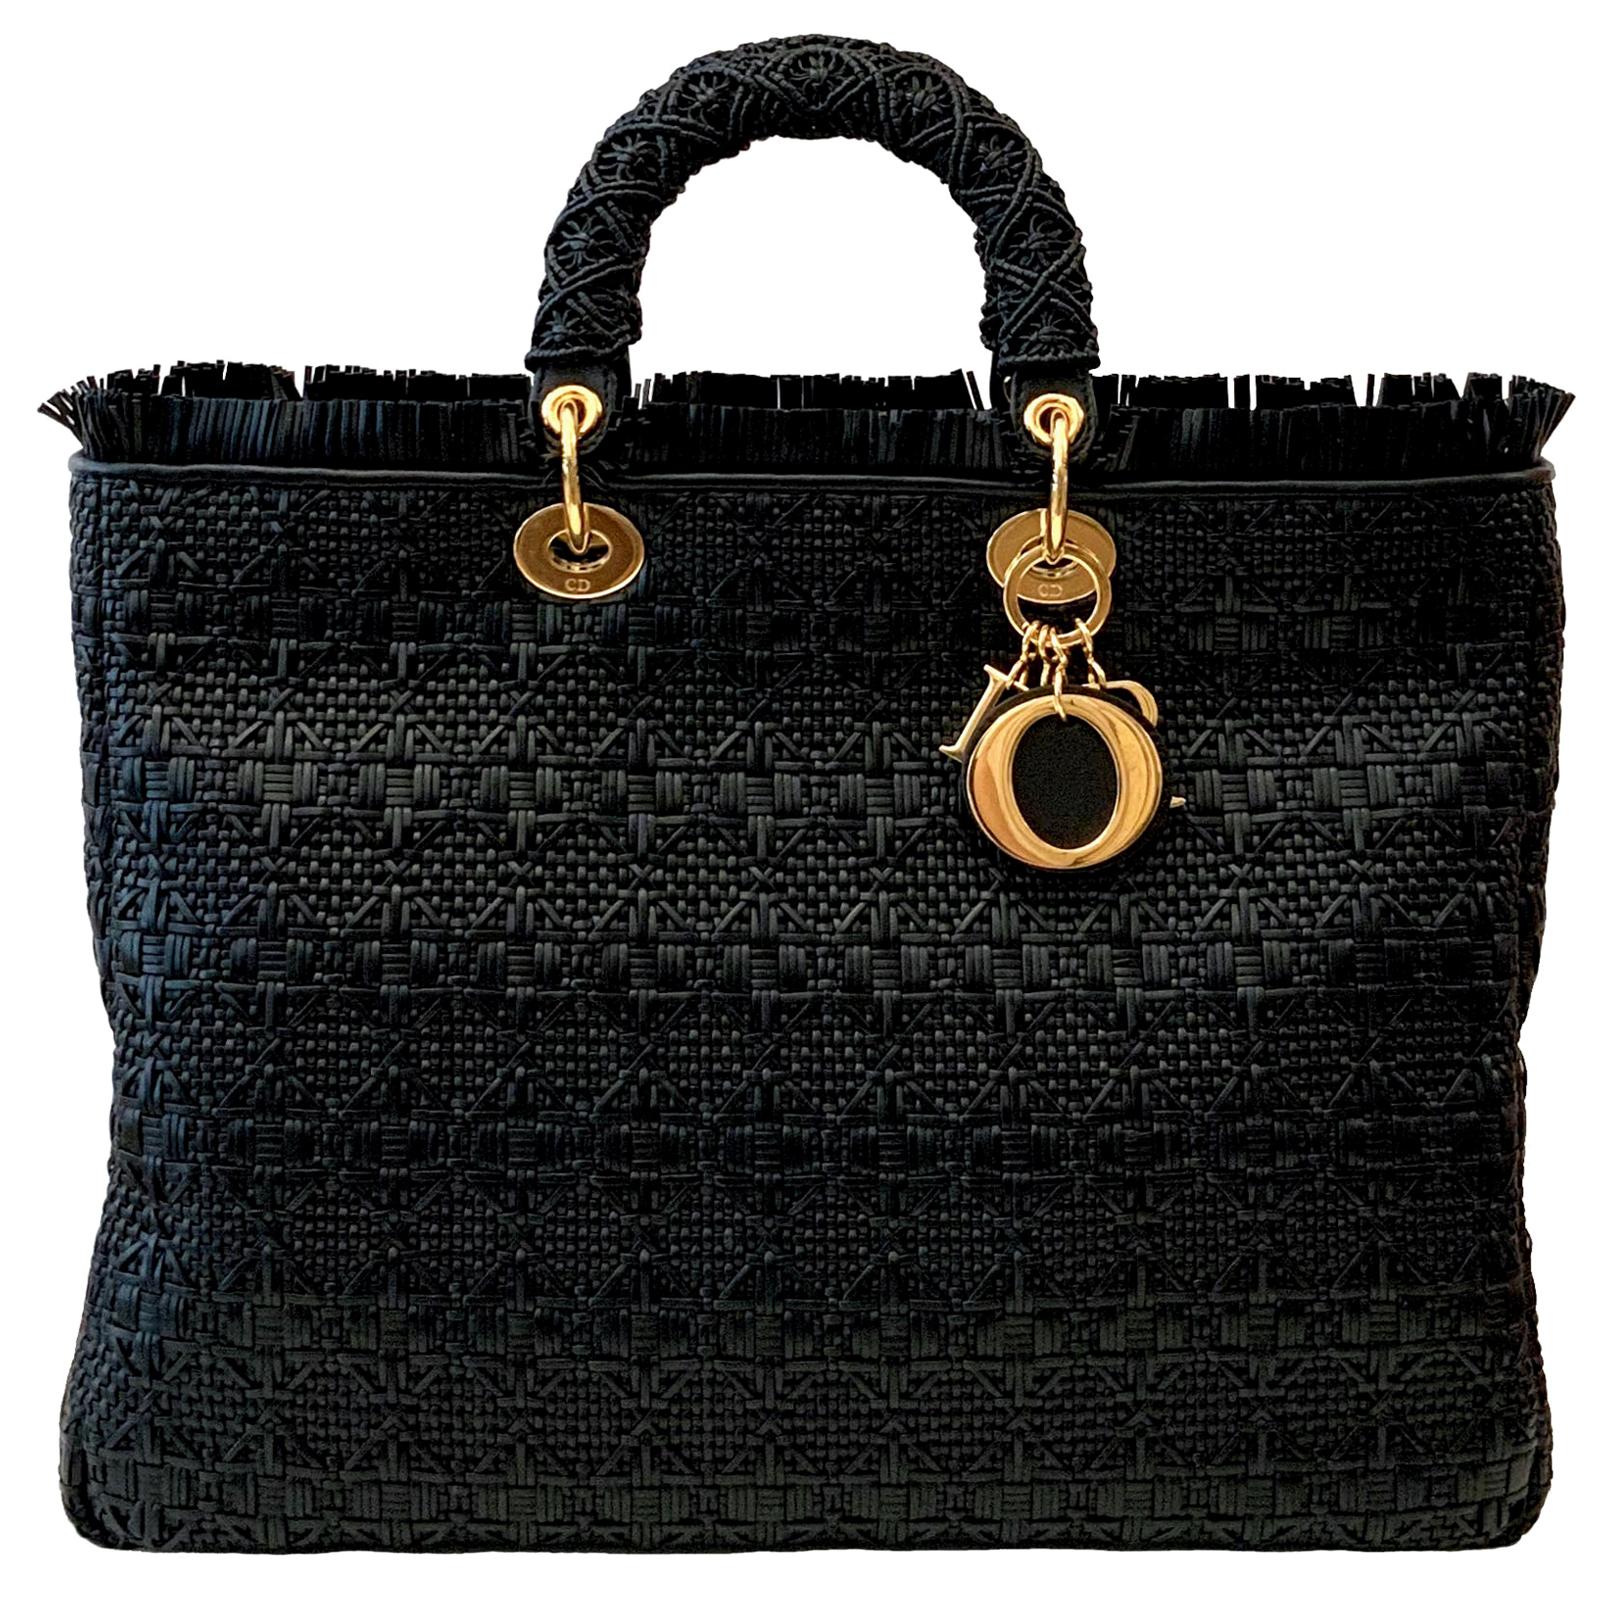 Christian Dior Lady Dior Bag Cannage Braided Leather Limited Edition